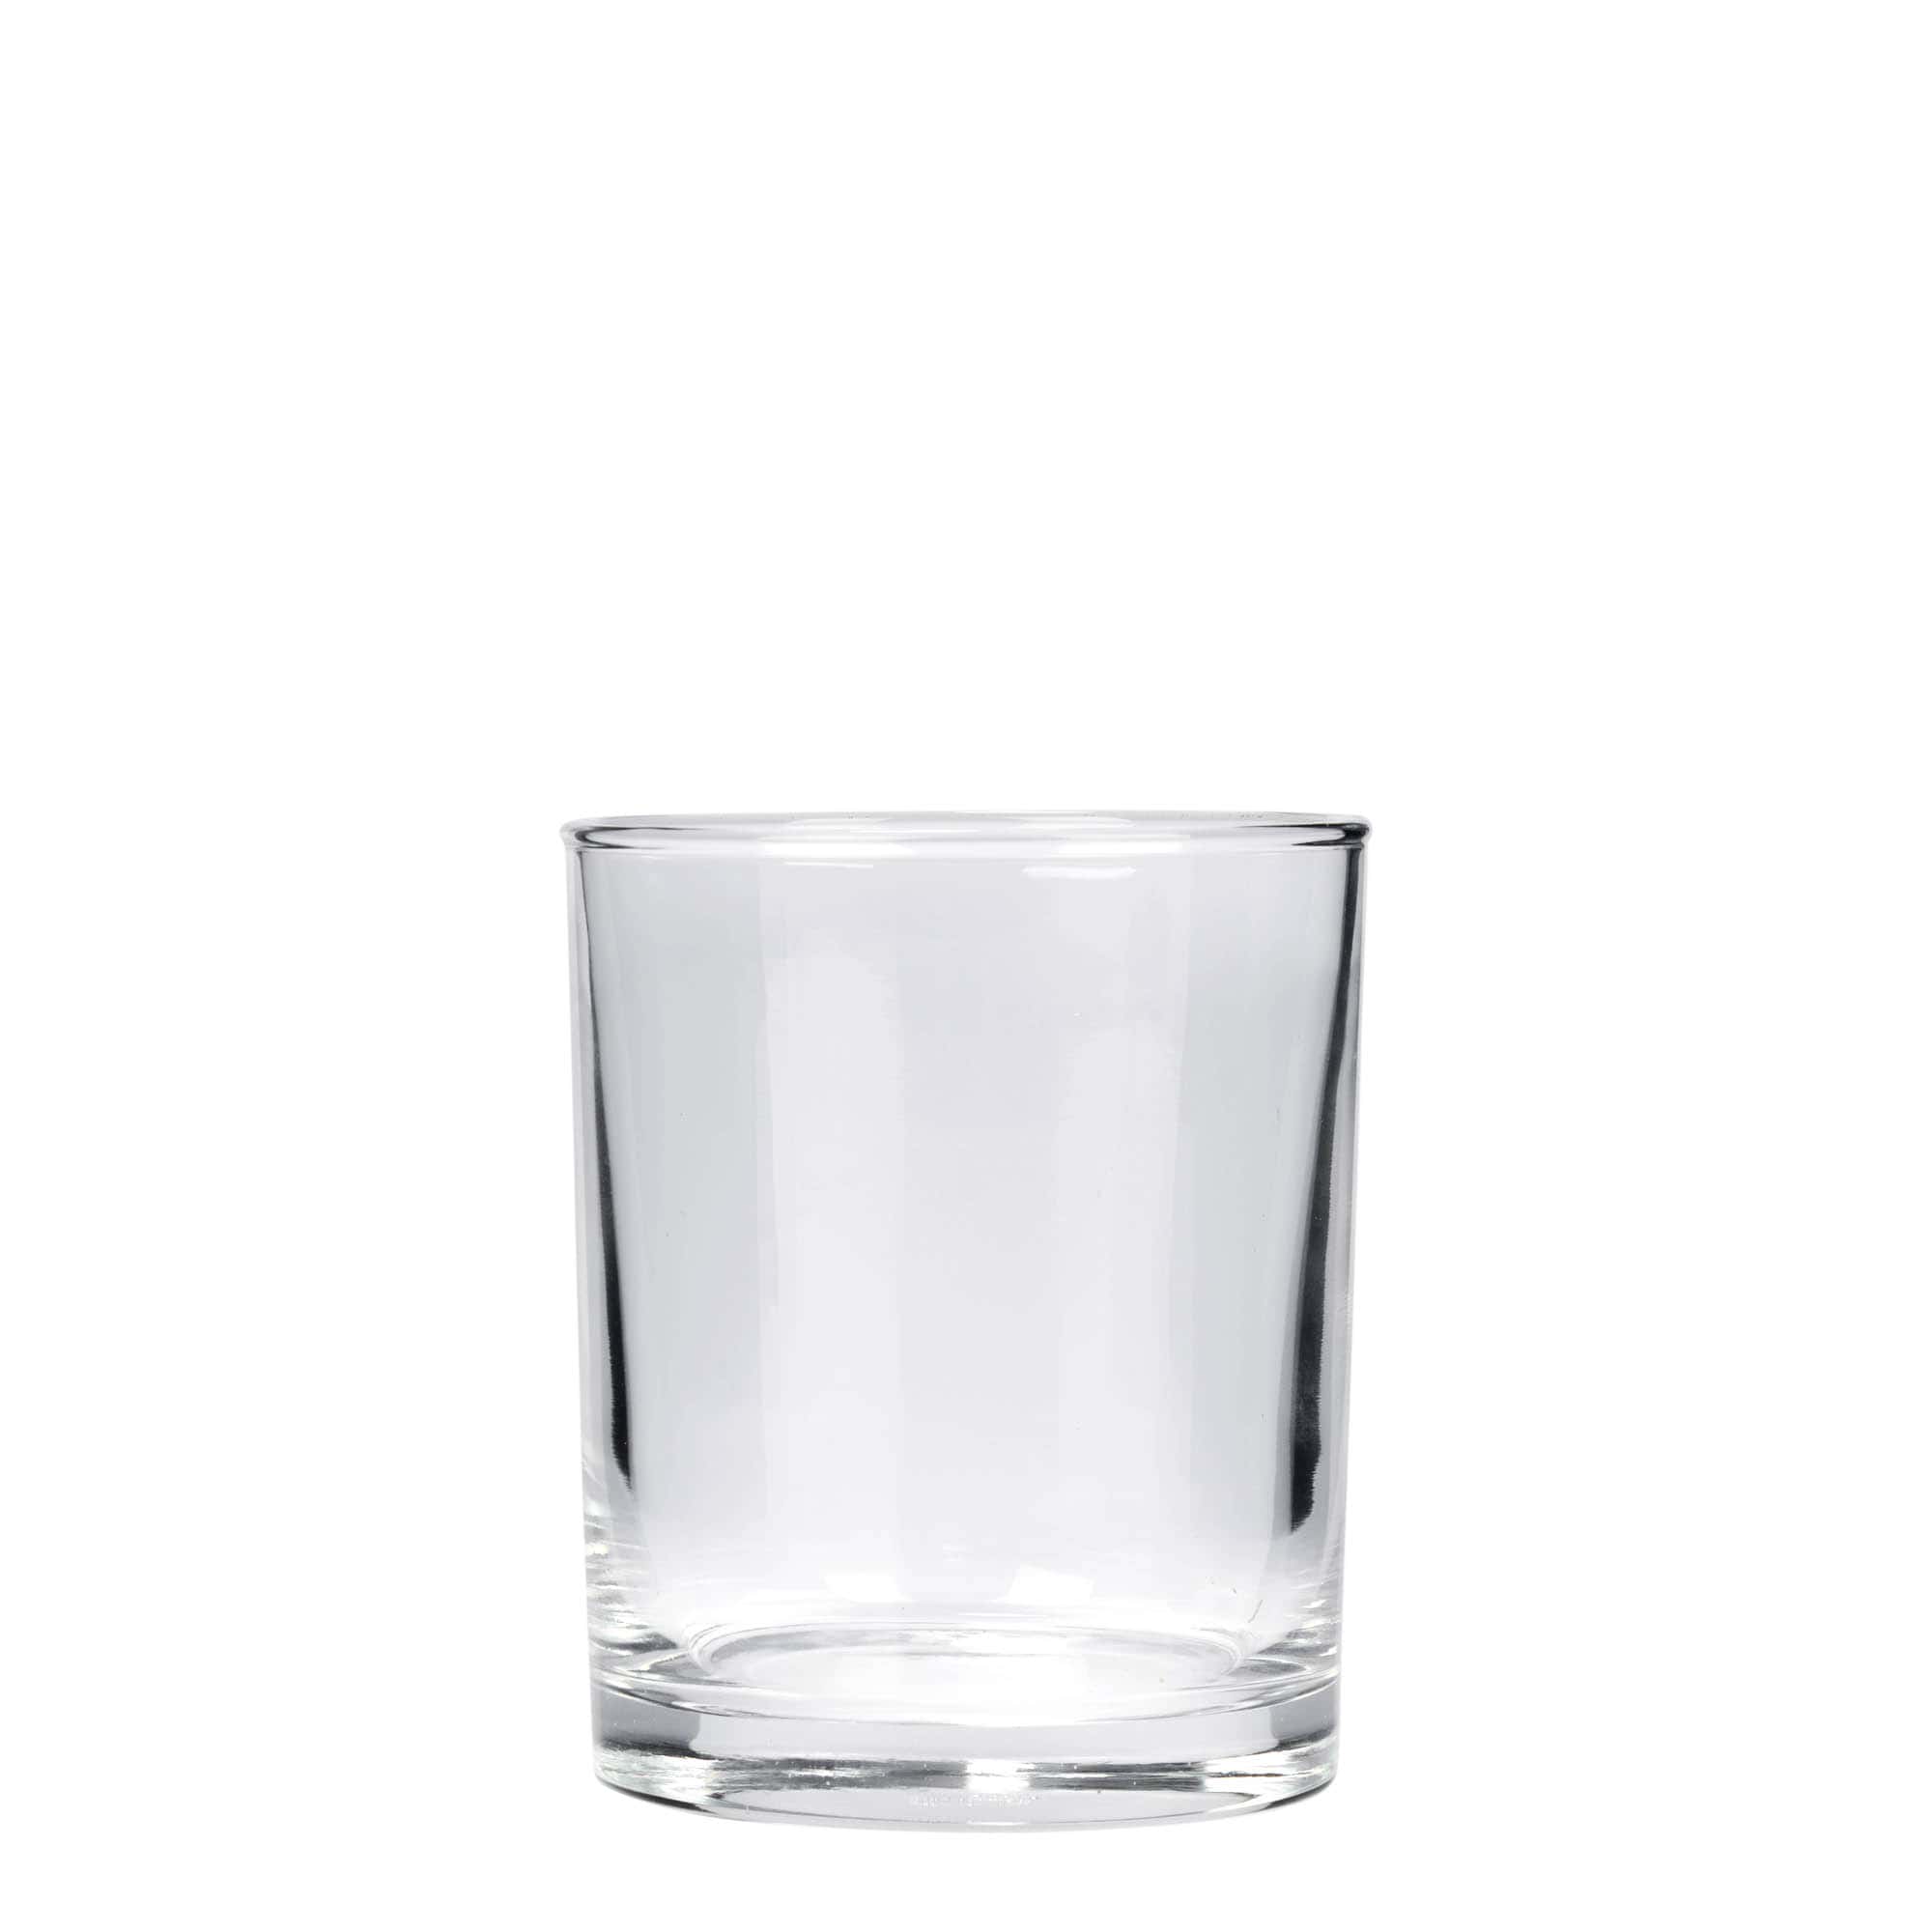 200 ml whisky glass 'Amsterdam', glass